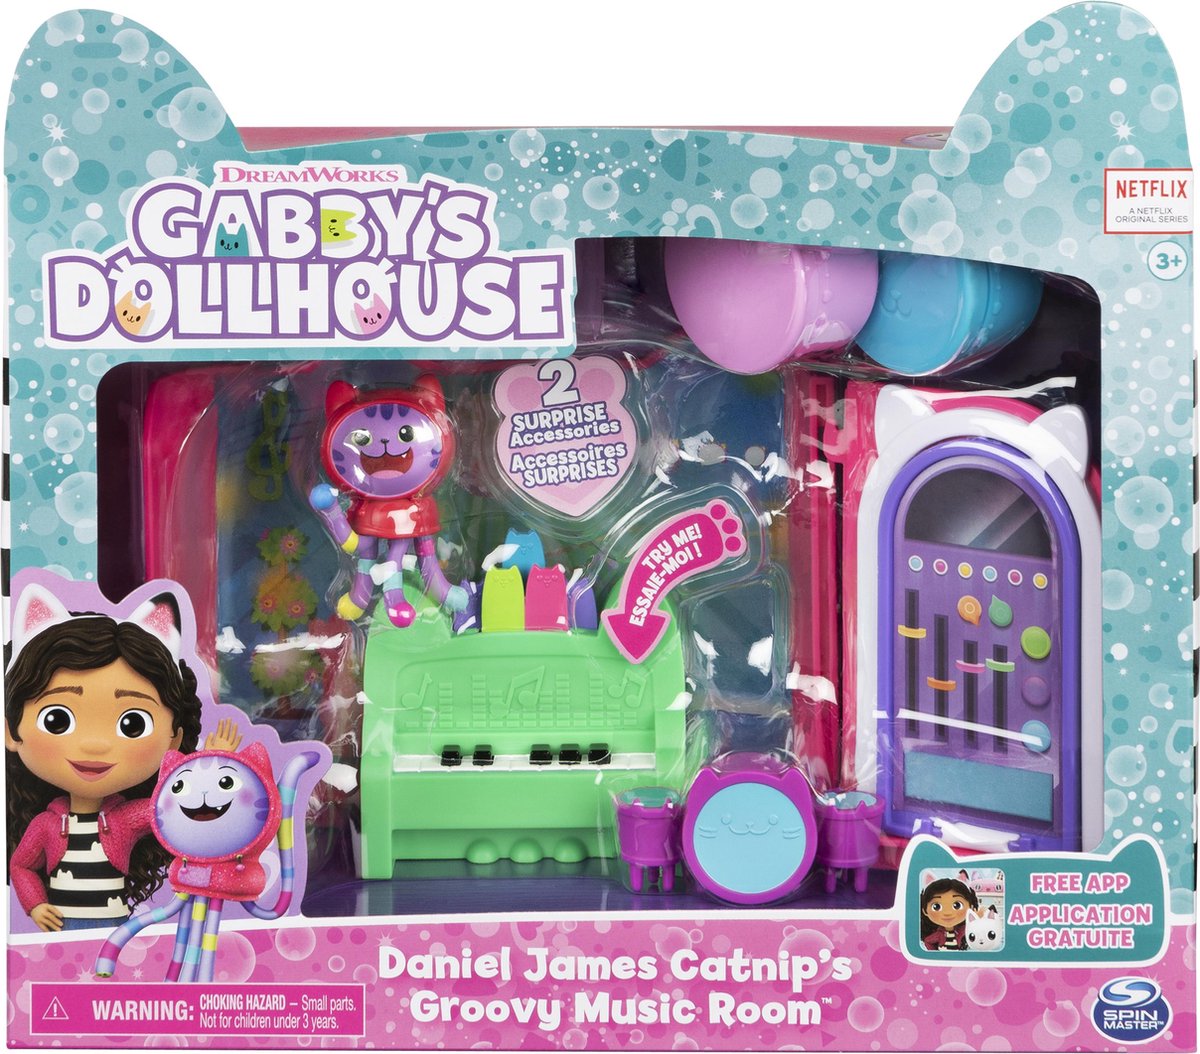 Gabby's Dollhouse Jouet Appareil Photo - Chat